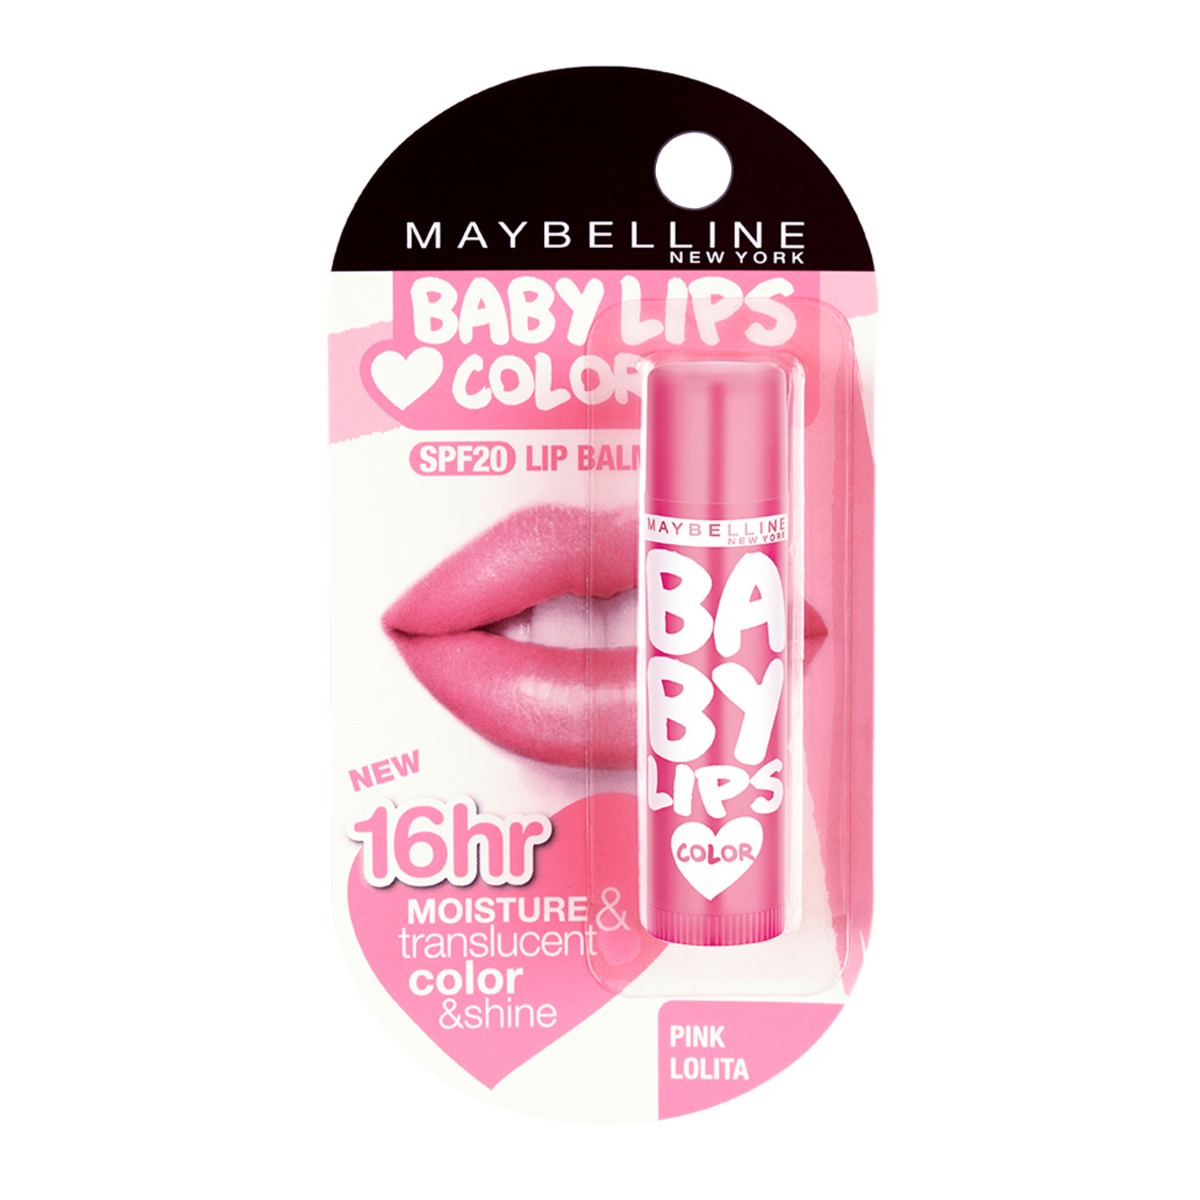 Maybelline New York Baby Lips Lip Balm, Pink Lolita, 4gm